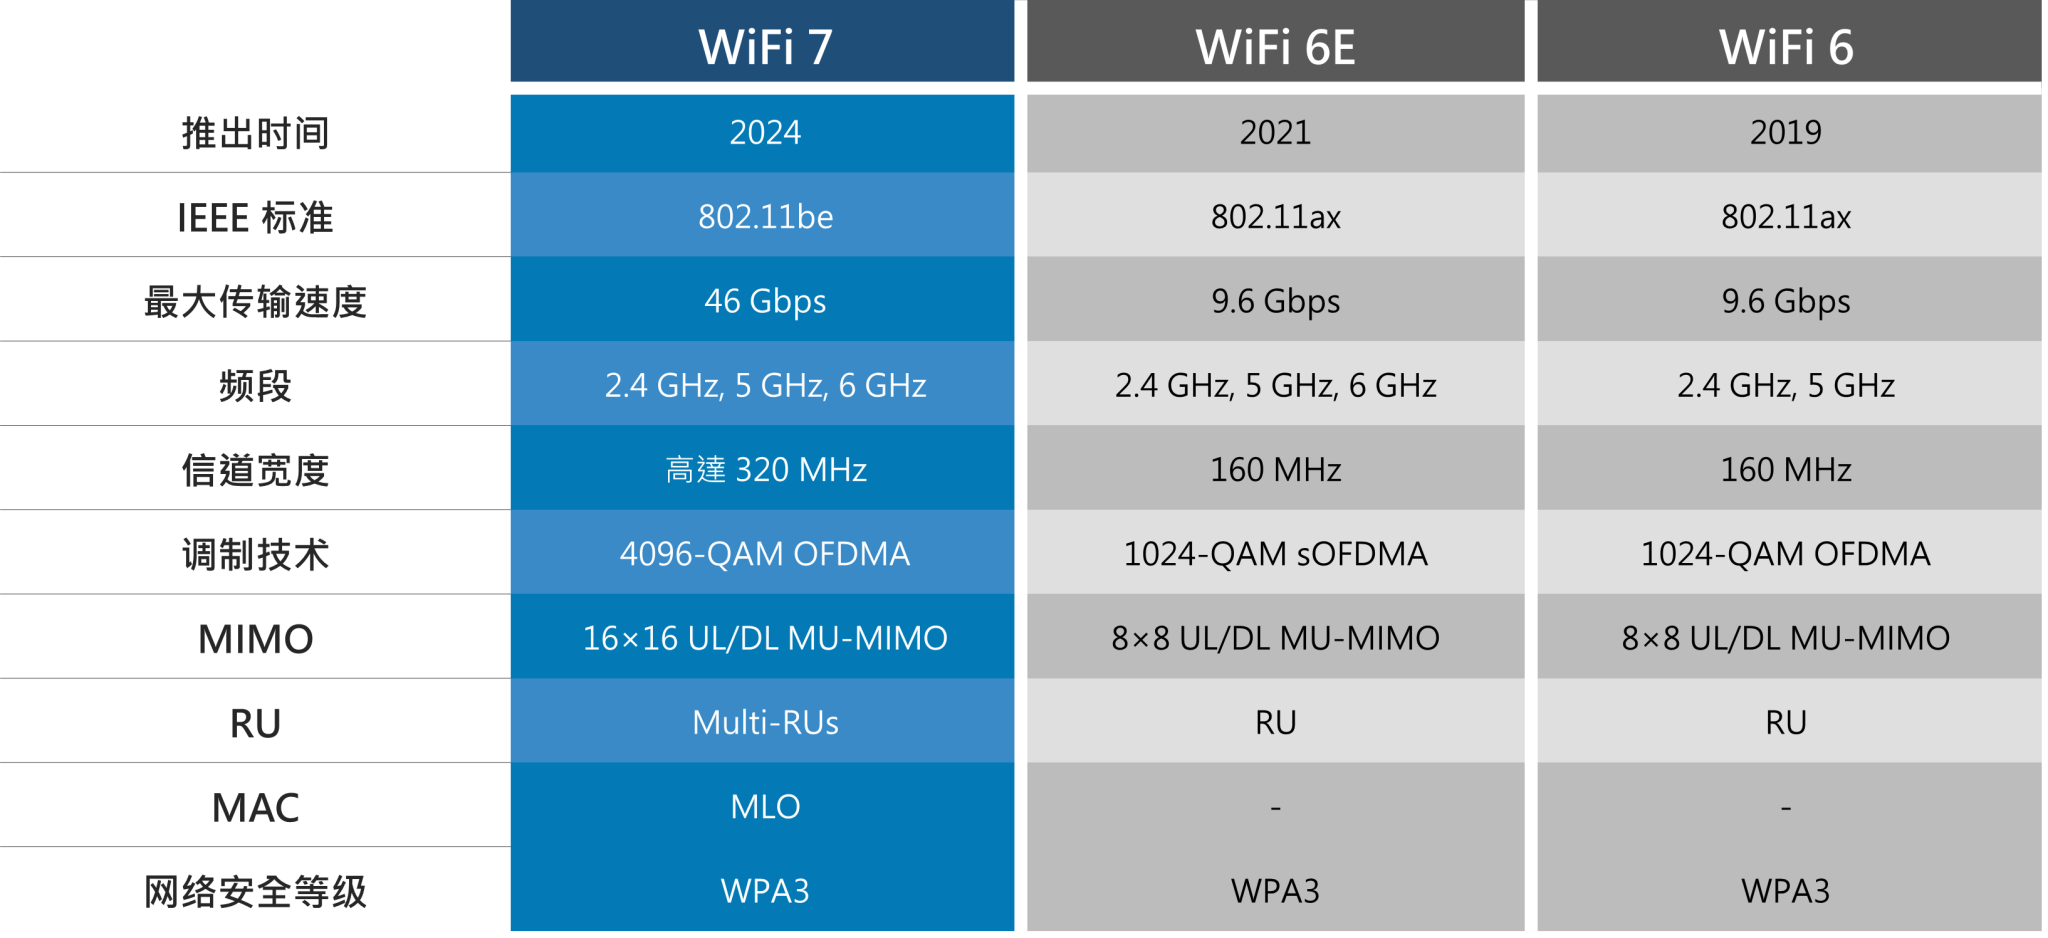 Wi-Fi 7 能力比较 vs Wi-Fi 6E vs Wi-Fi 6